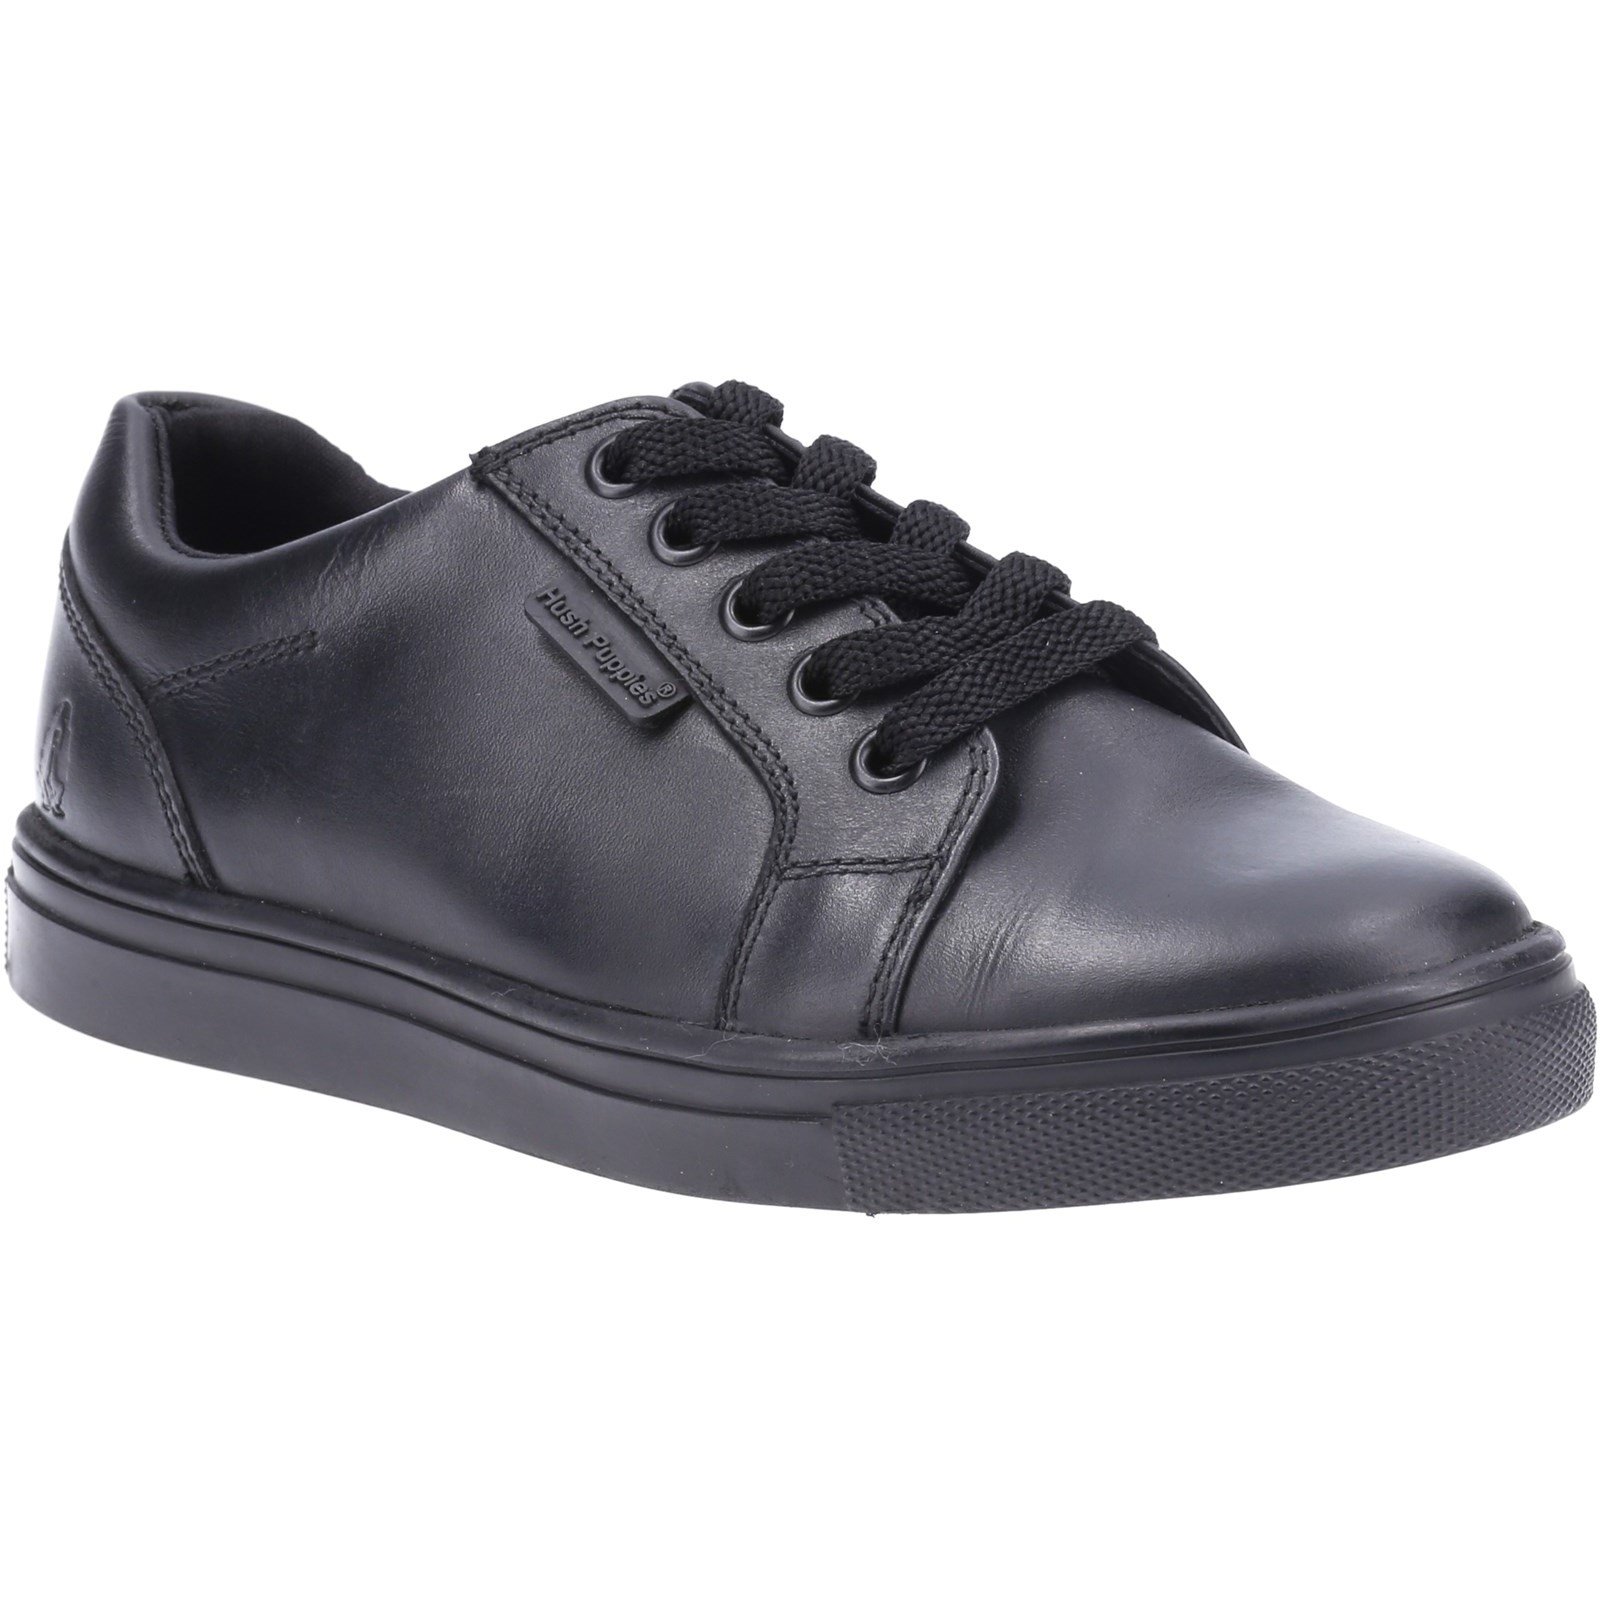 Hush Puppies Kid's Sam Junior School Shoe Black 32579 - Black 13